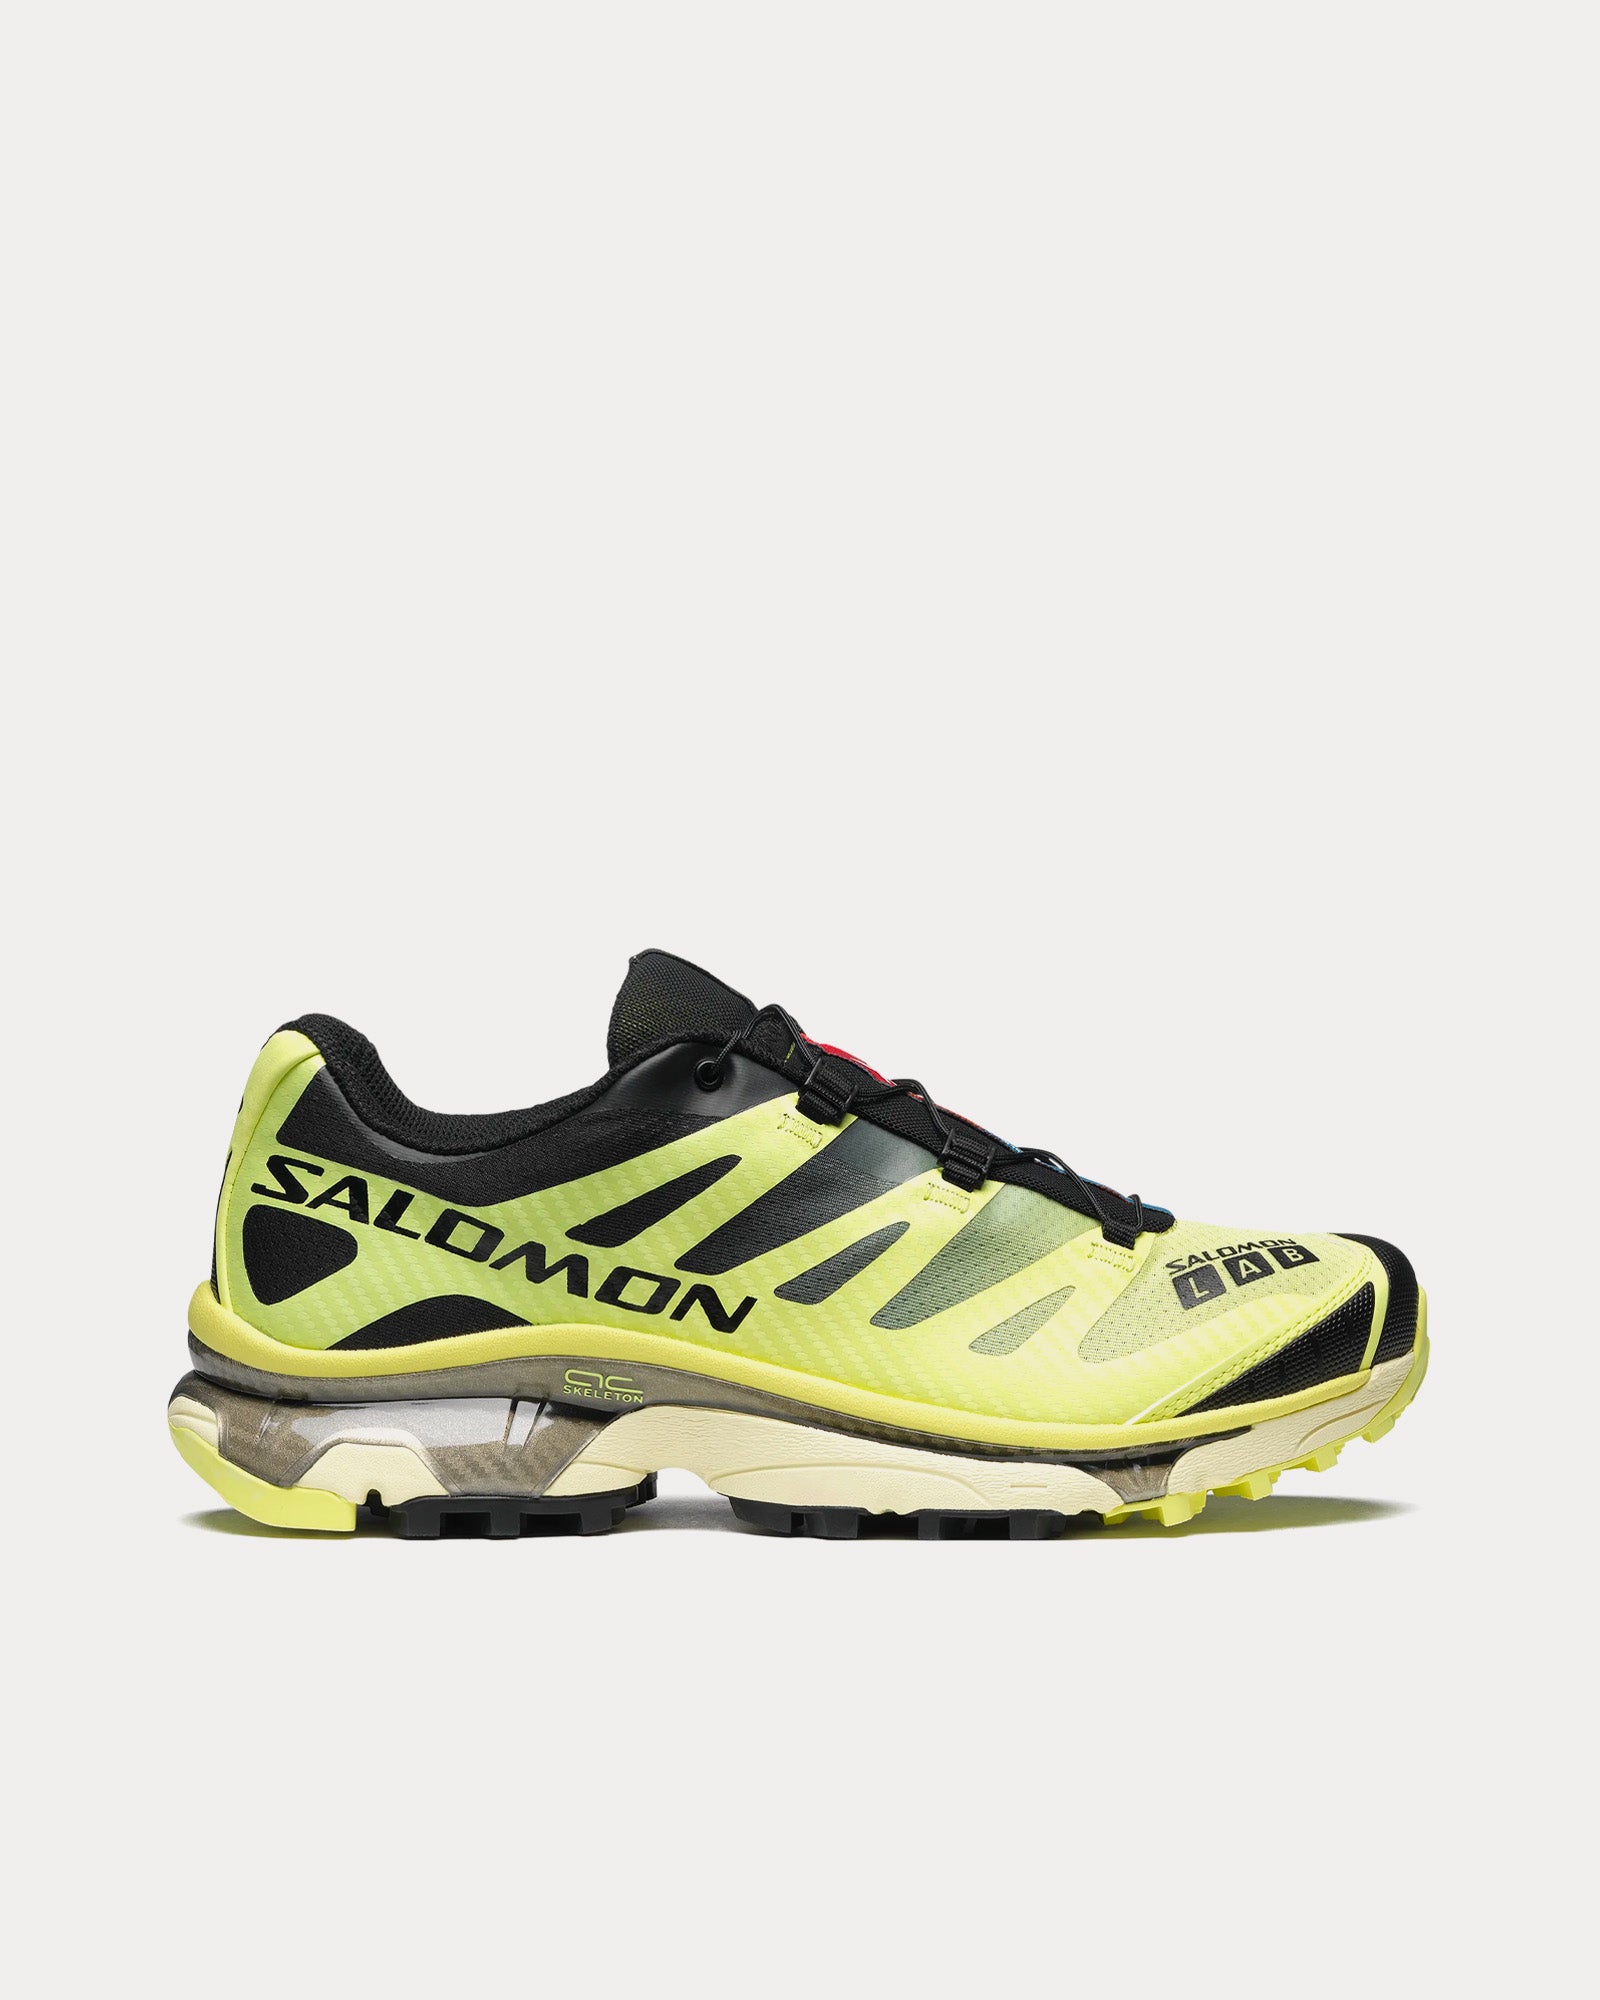 Salomon - XT-4 OG Sunny Lime / Black / Transparent Yellow Low Top Sneakers